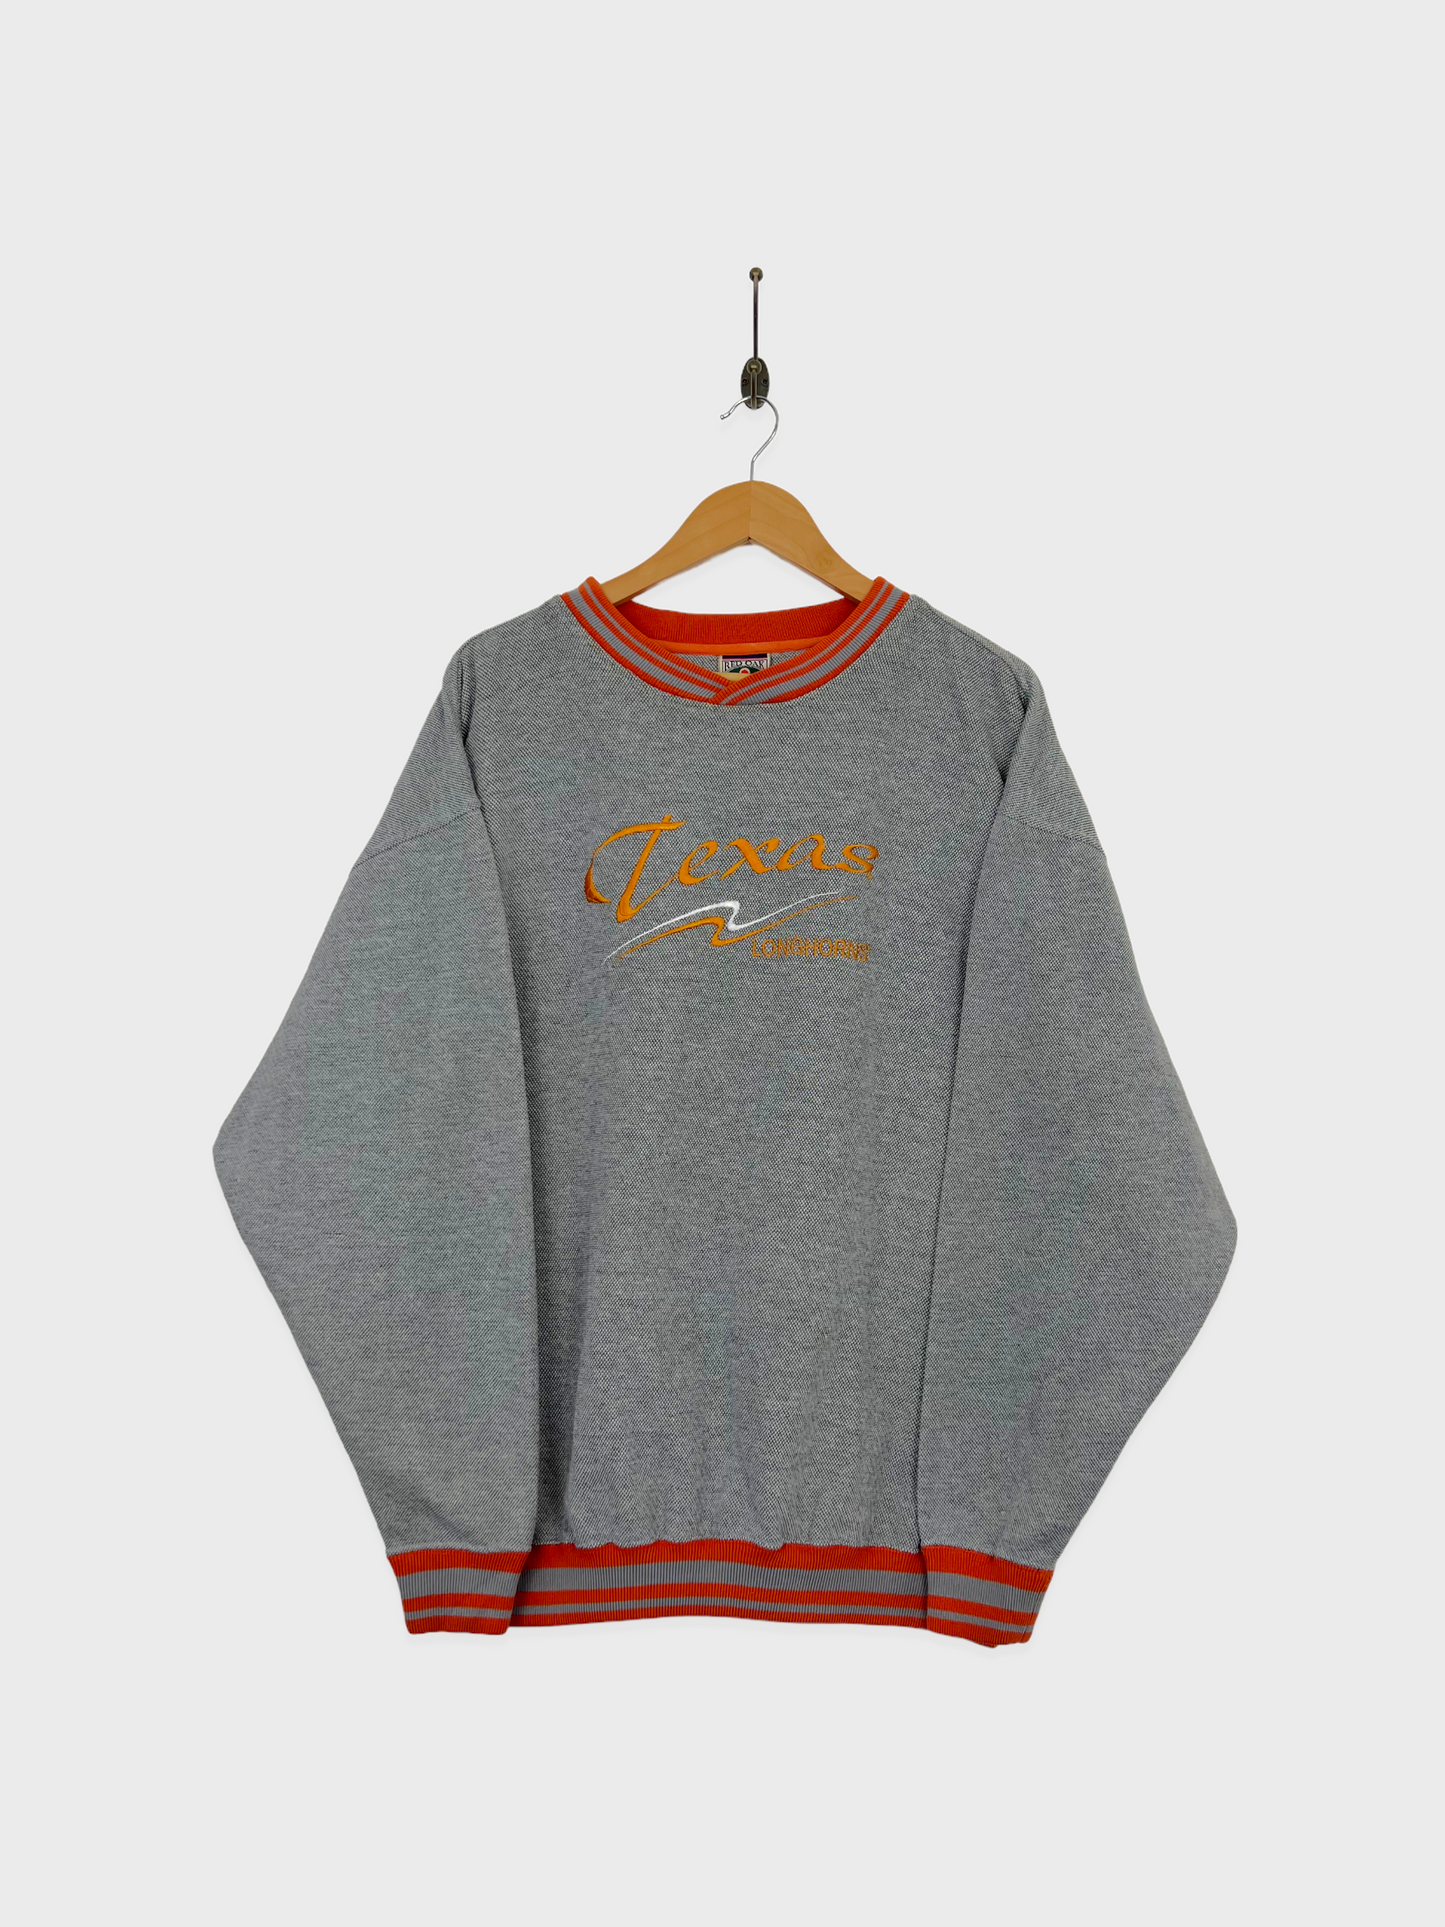 90's Texas Longhorns Embroidered Vintage Sweatshirt Size L